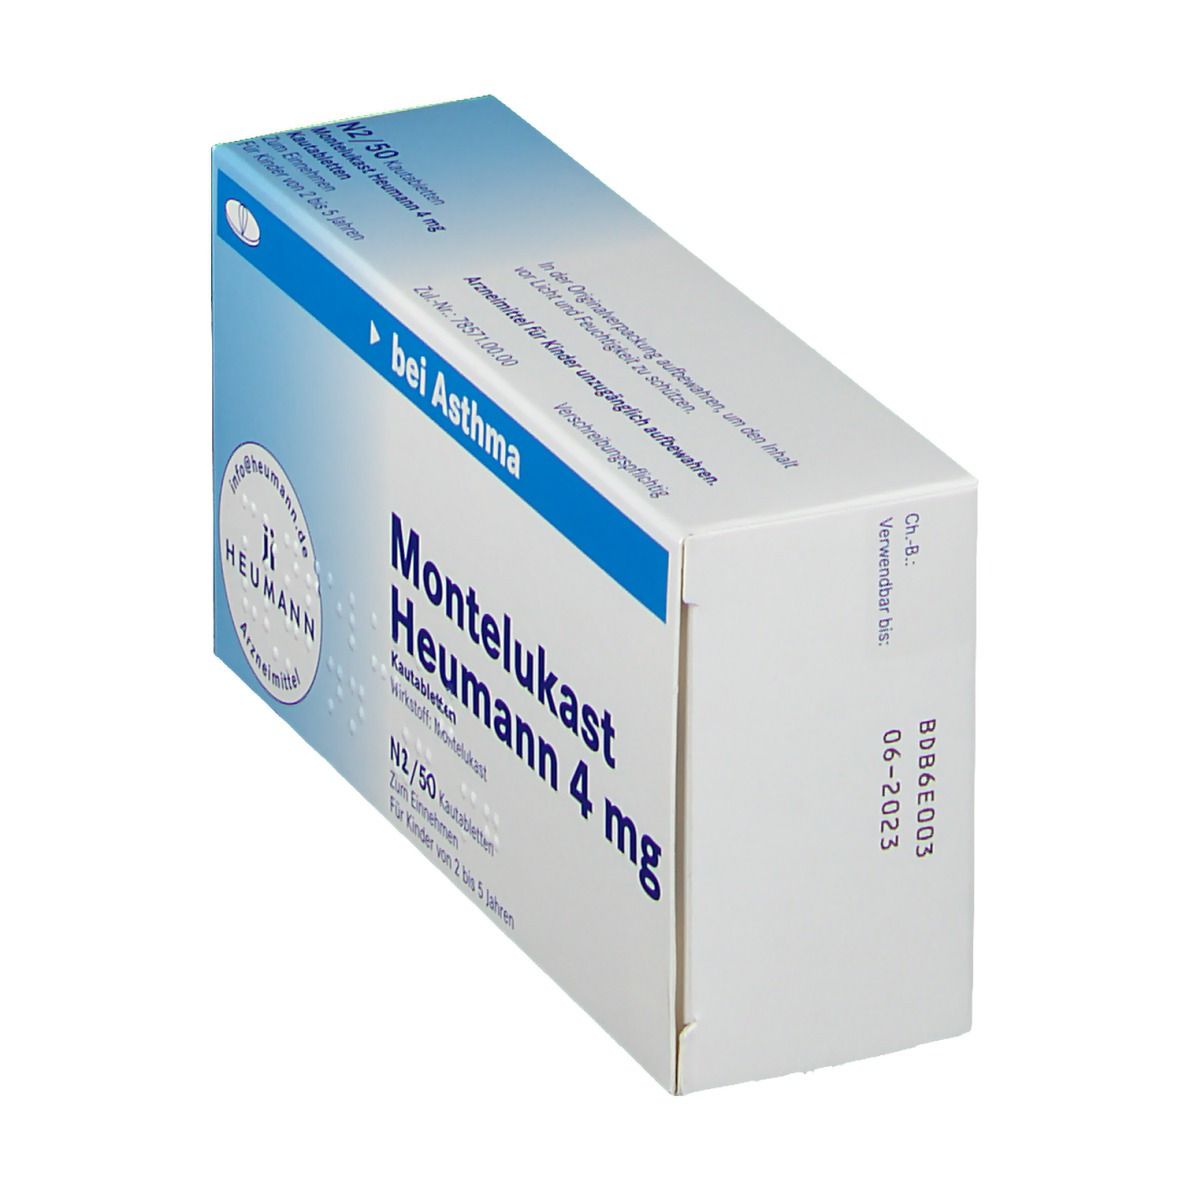 Montelukast Heumann 4 mg